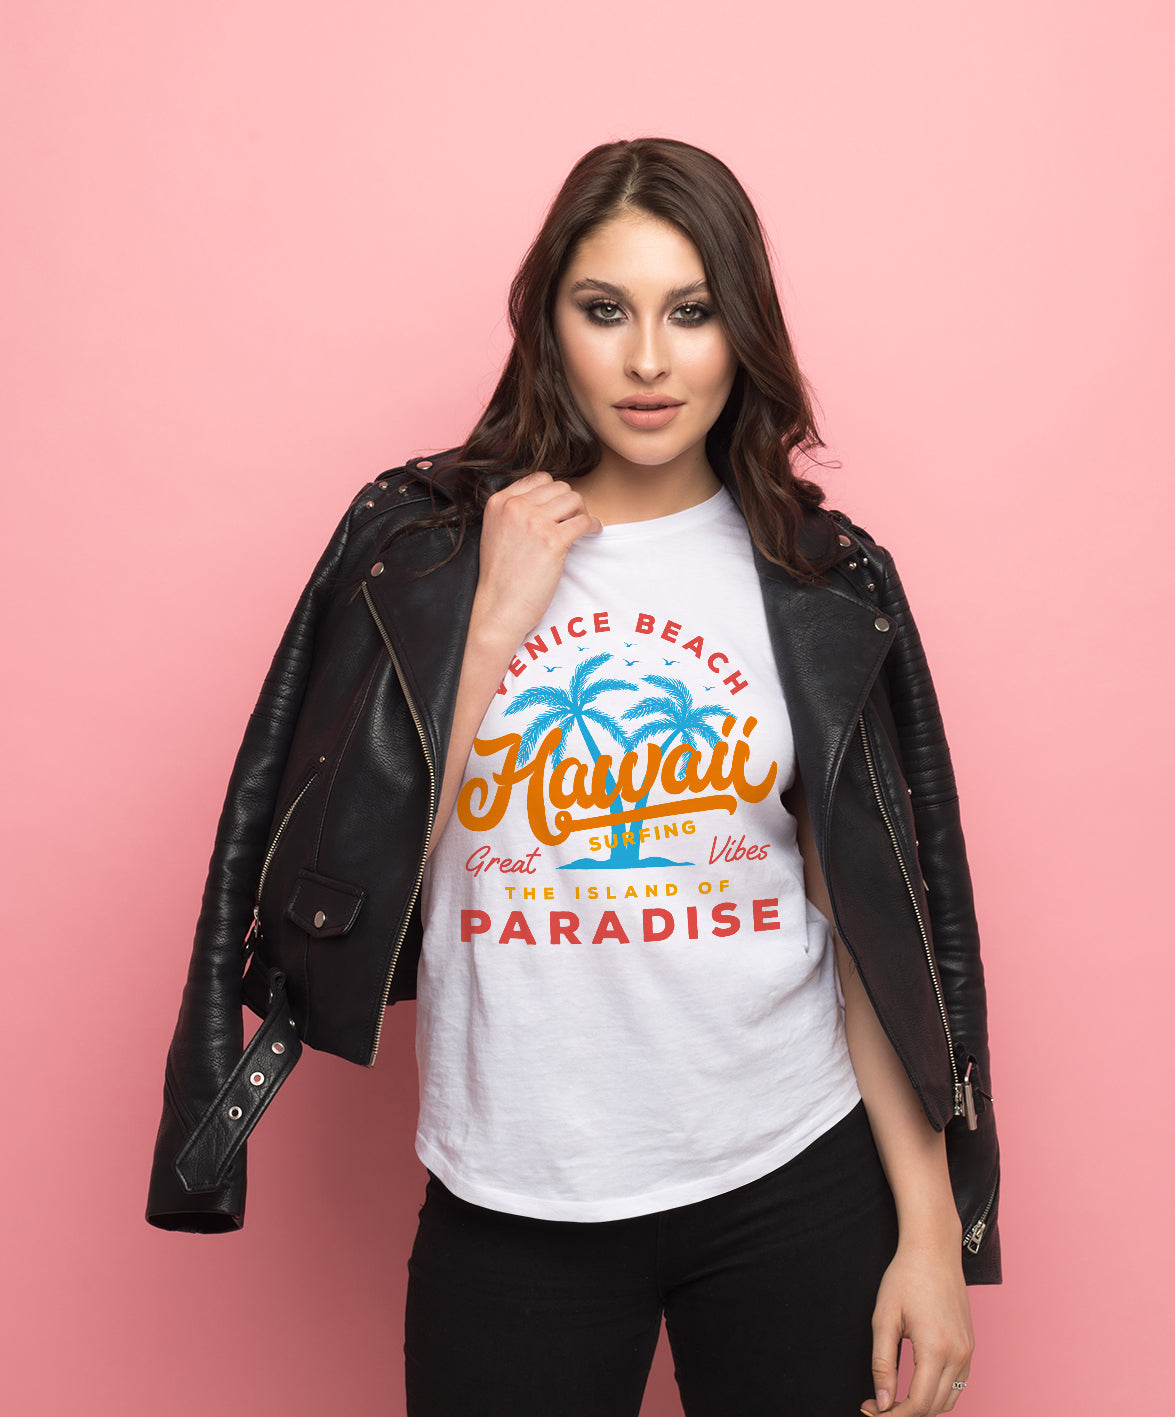 "HAWAII PARADISE" T-shirt